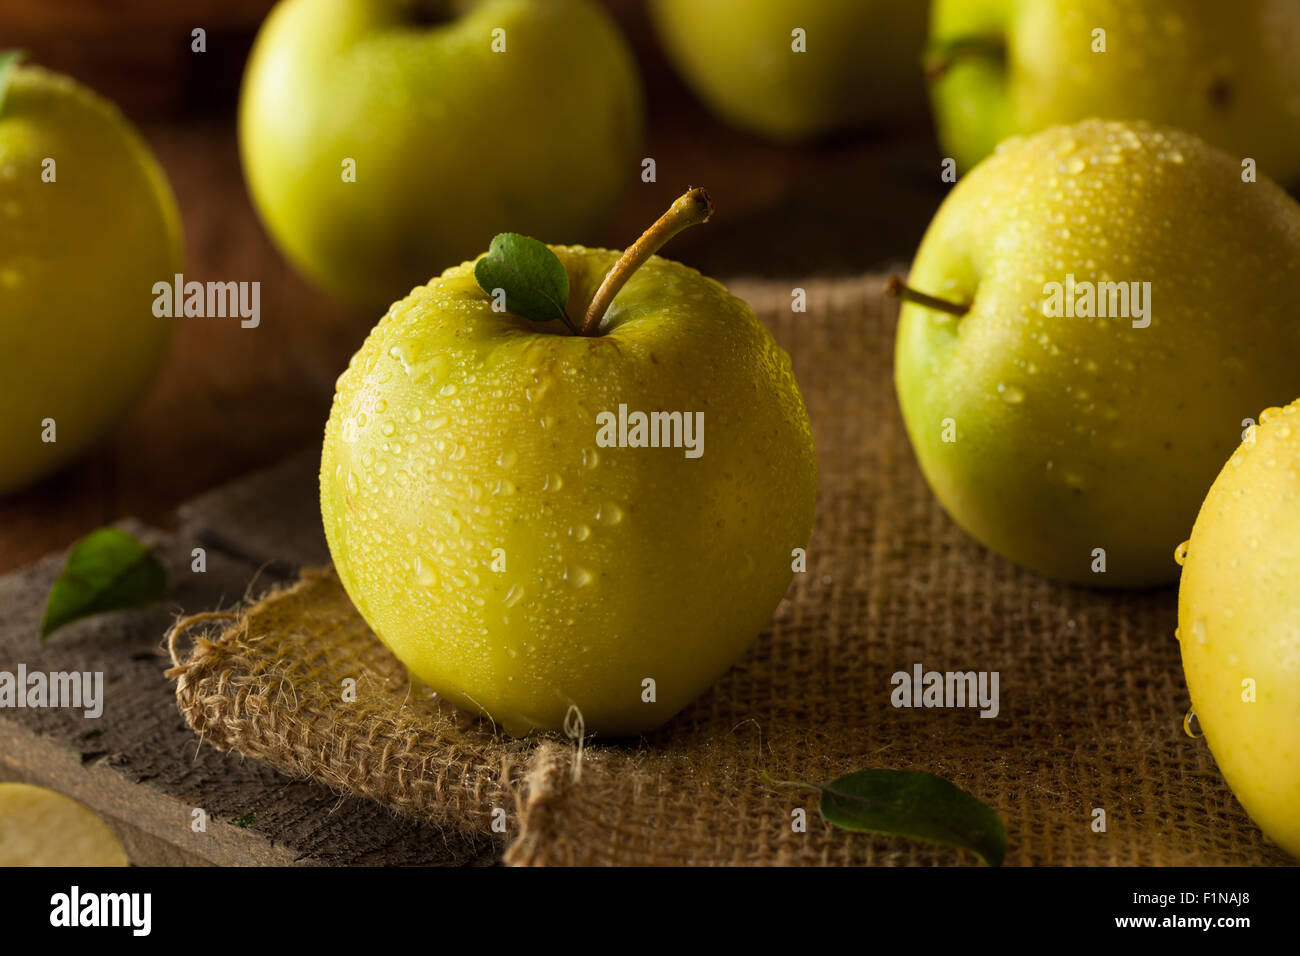 Golden Delicious Apples - Organic Golden Delicious Apples